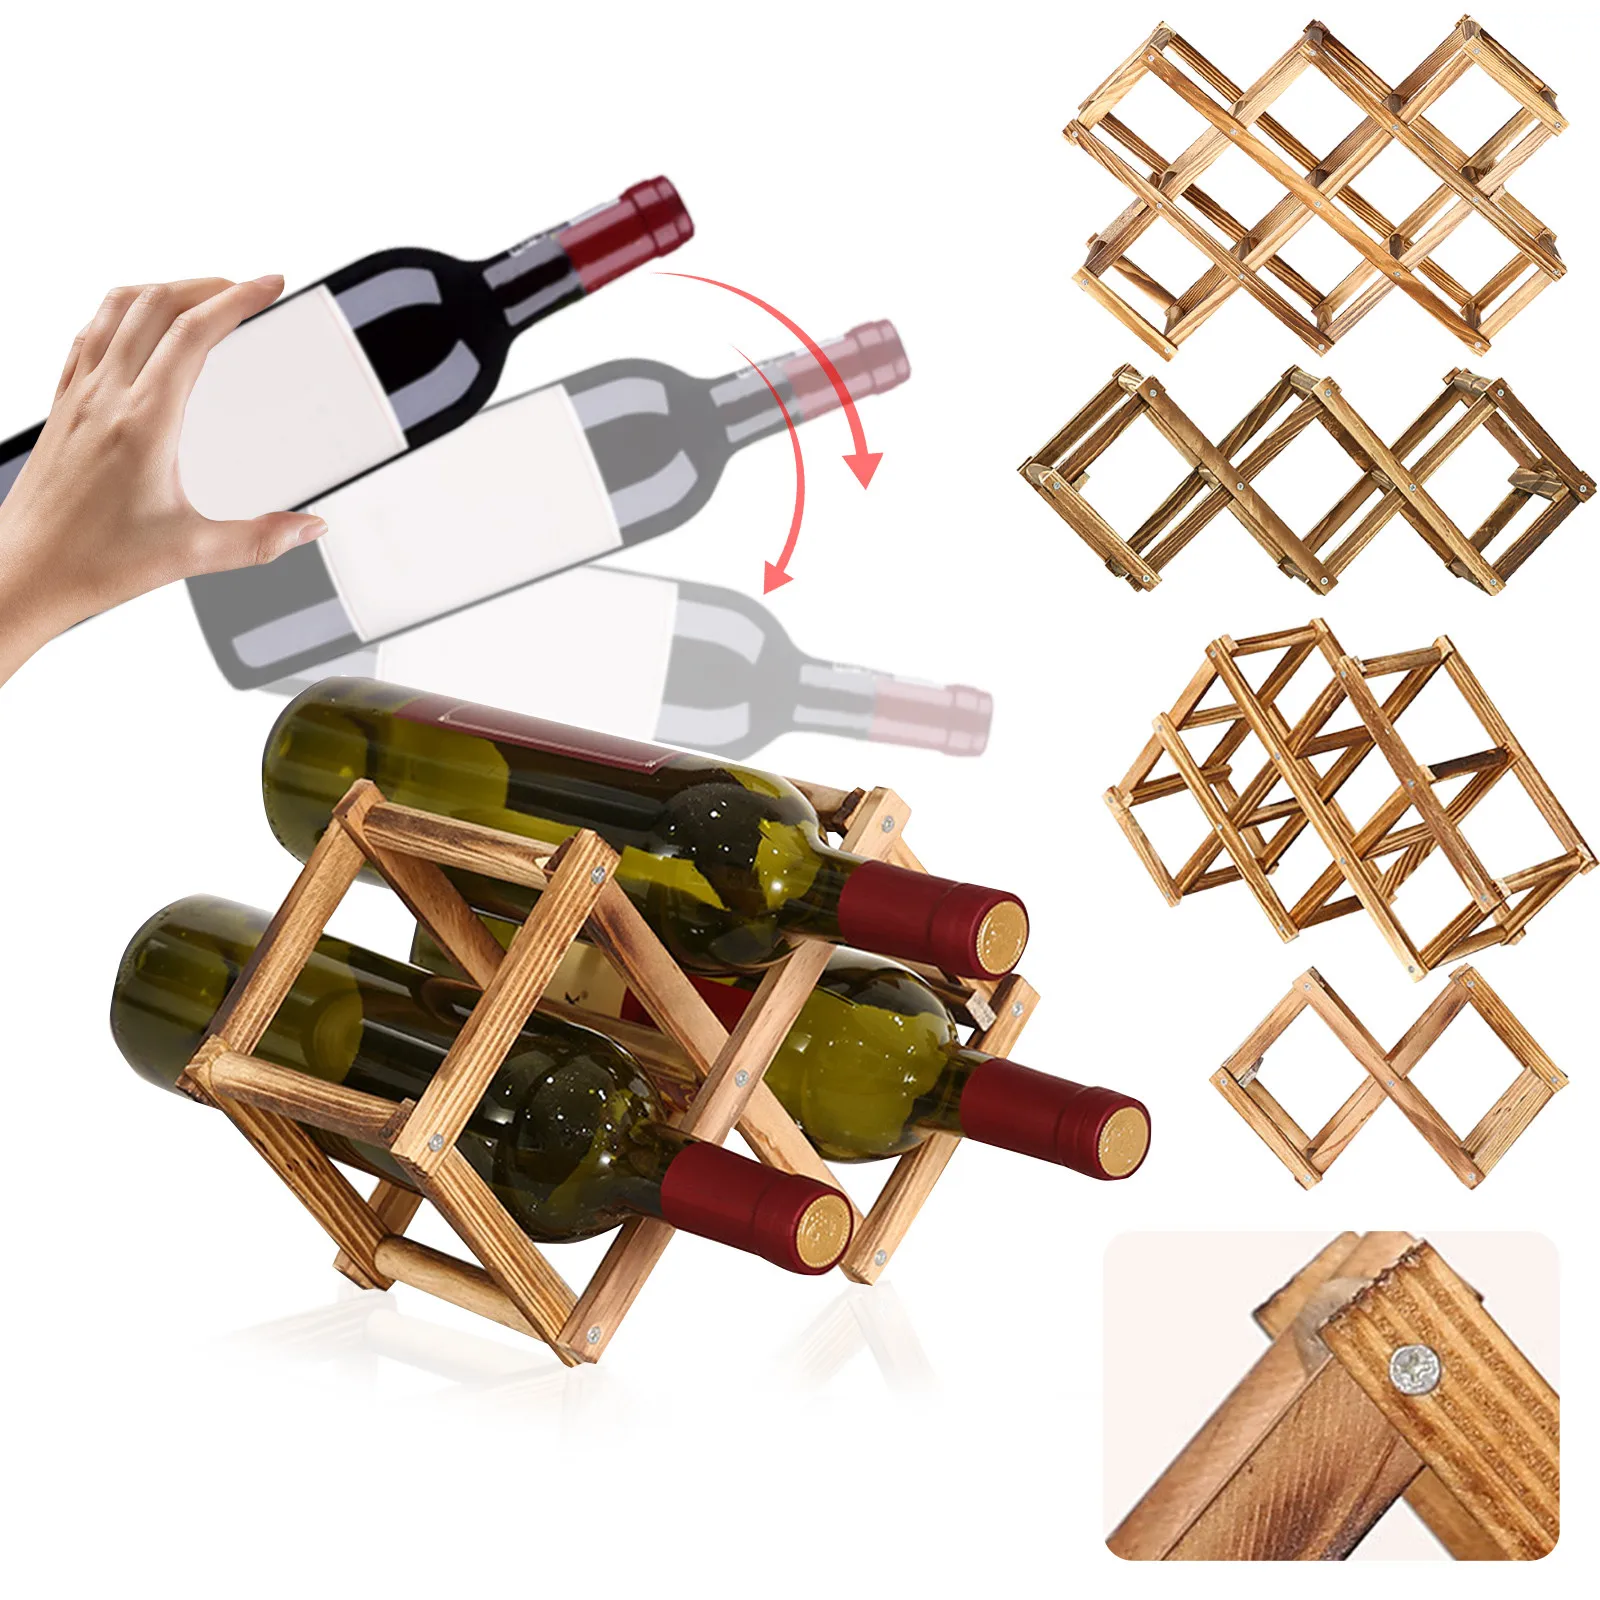 

Wood Wine Storage Rack Wooden Stackable Wine Cellar Racks Foldable Tabletop Free Standing Wine Bottle Stand Holder Display Shelf